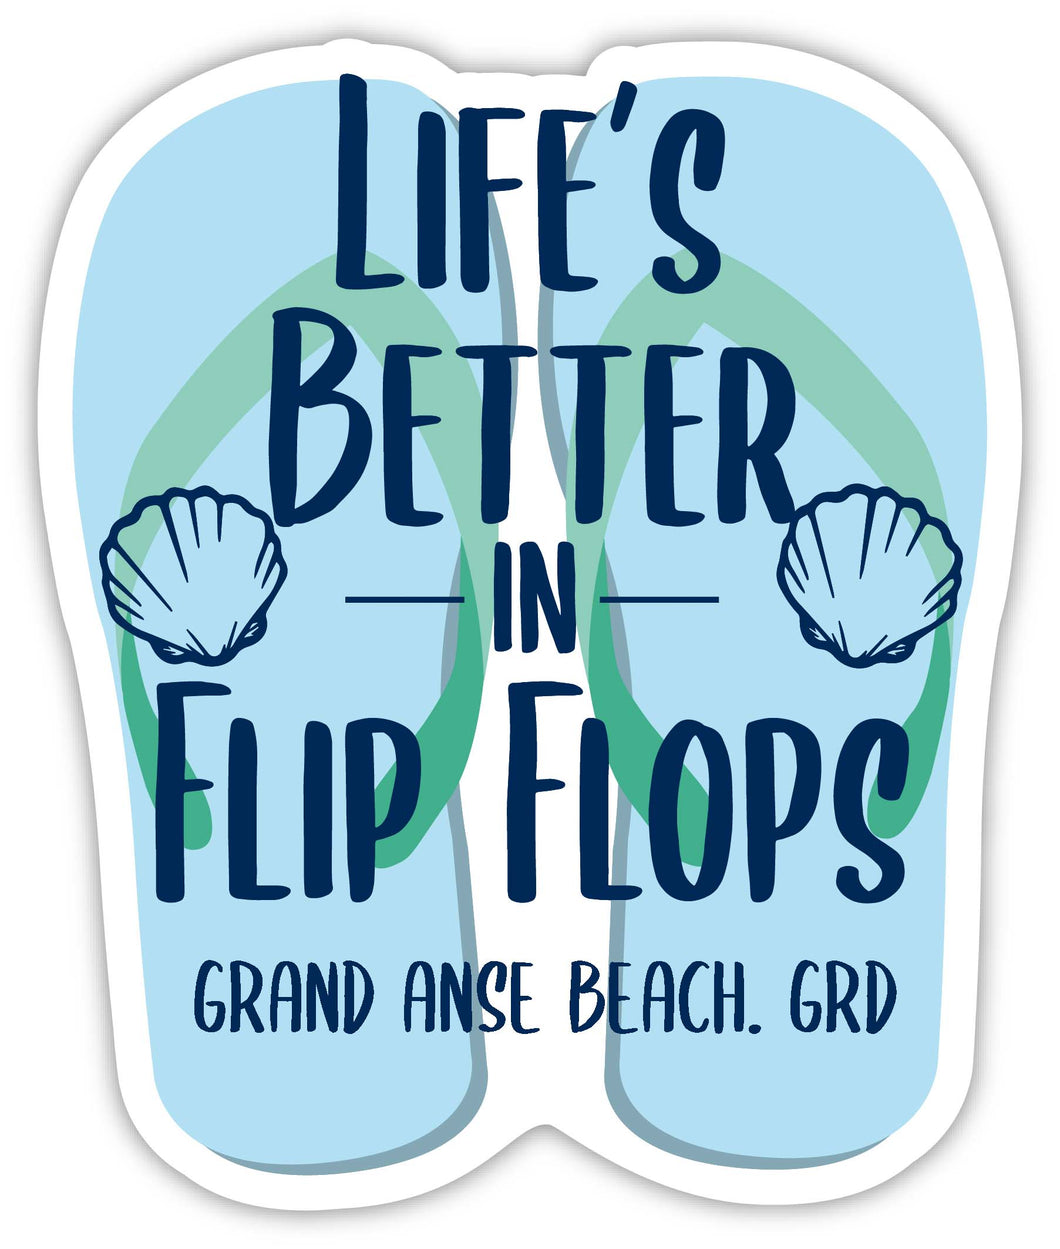 Grand Anse Beach Grenada Souvenir 4 Inch Vinyl Decal Sticker Flip Flop Design